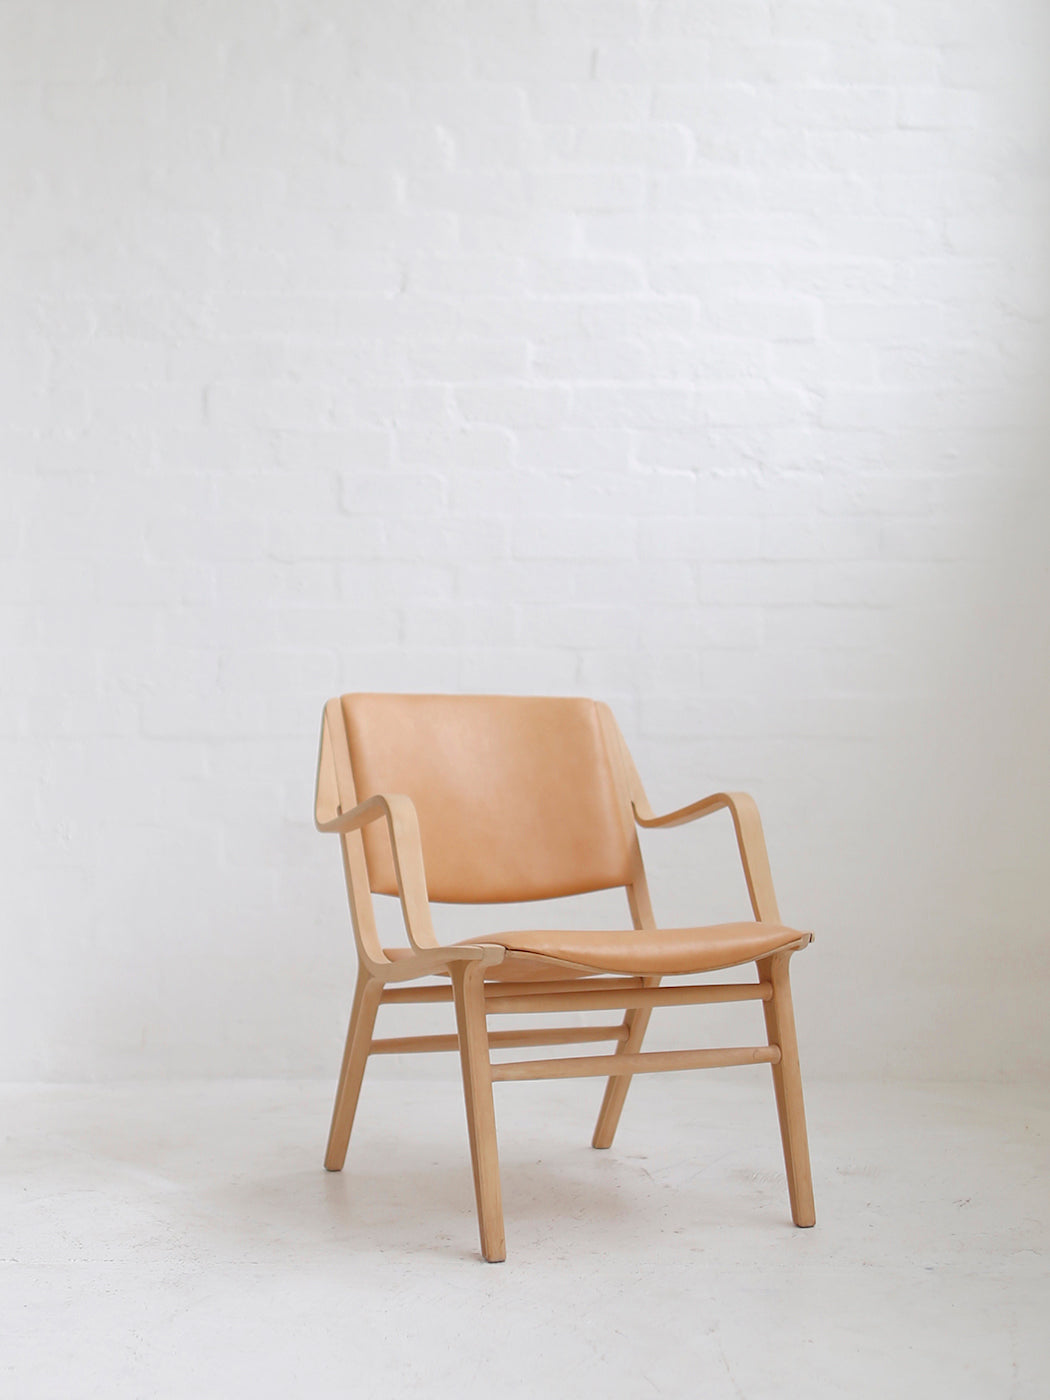 Hvidt & Mølgaard 'Ax' Chair